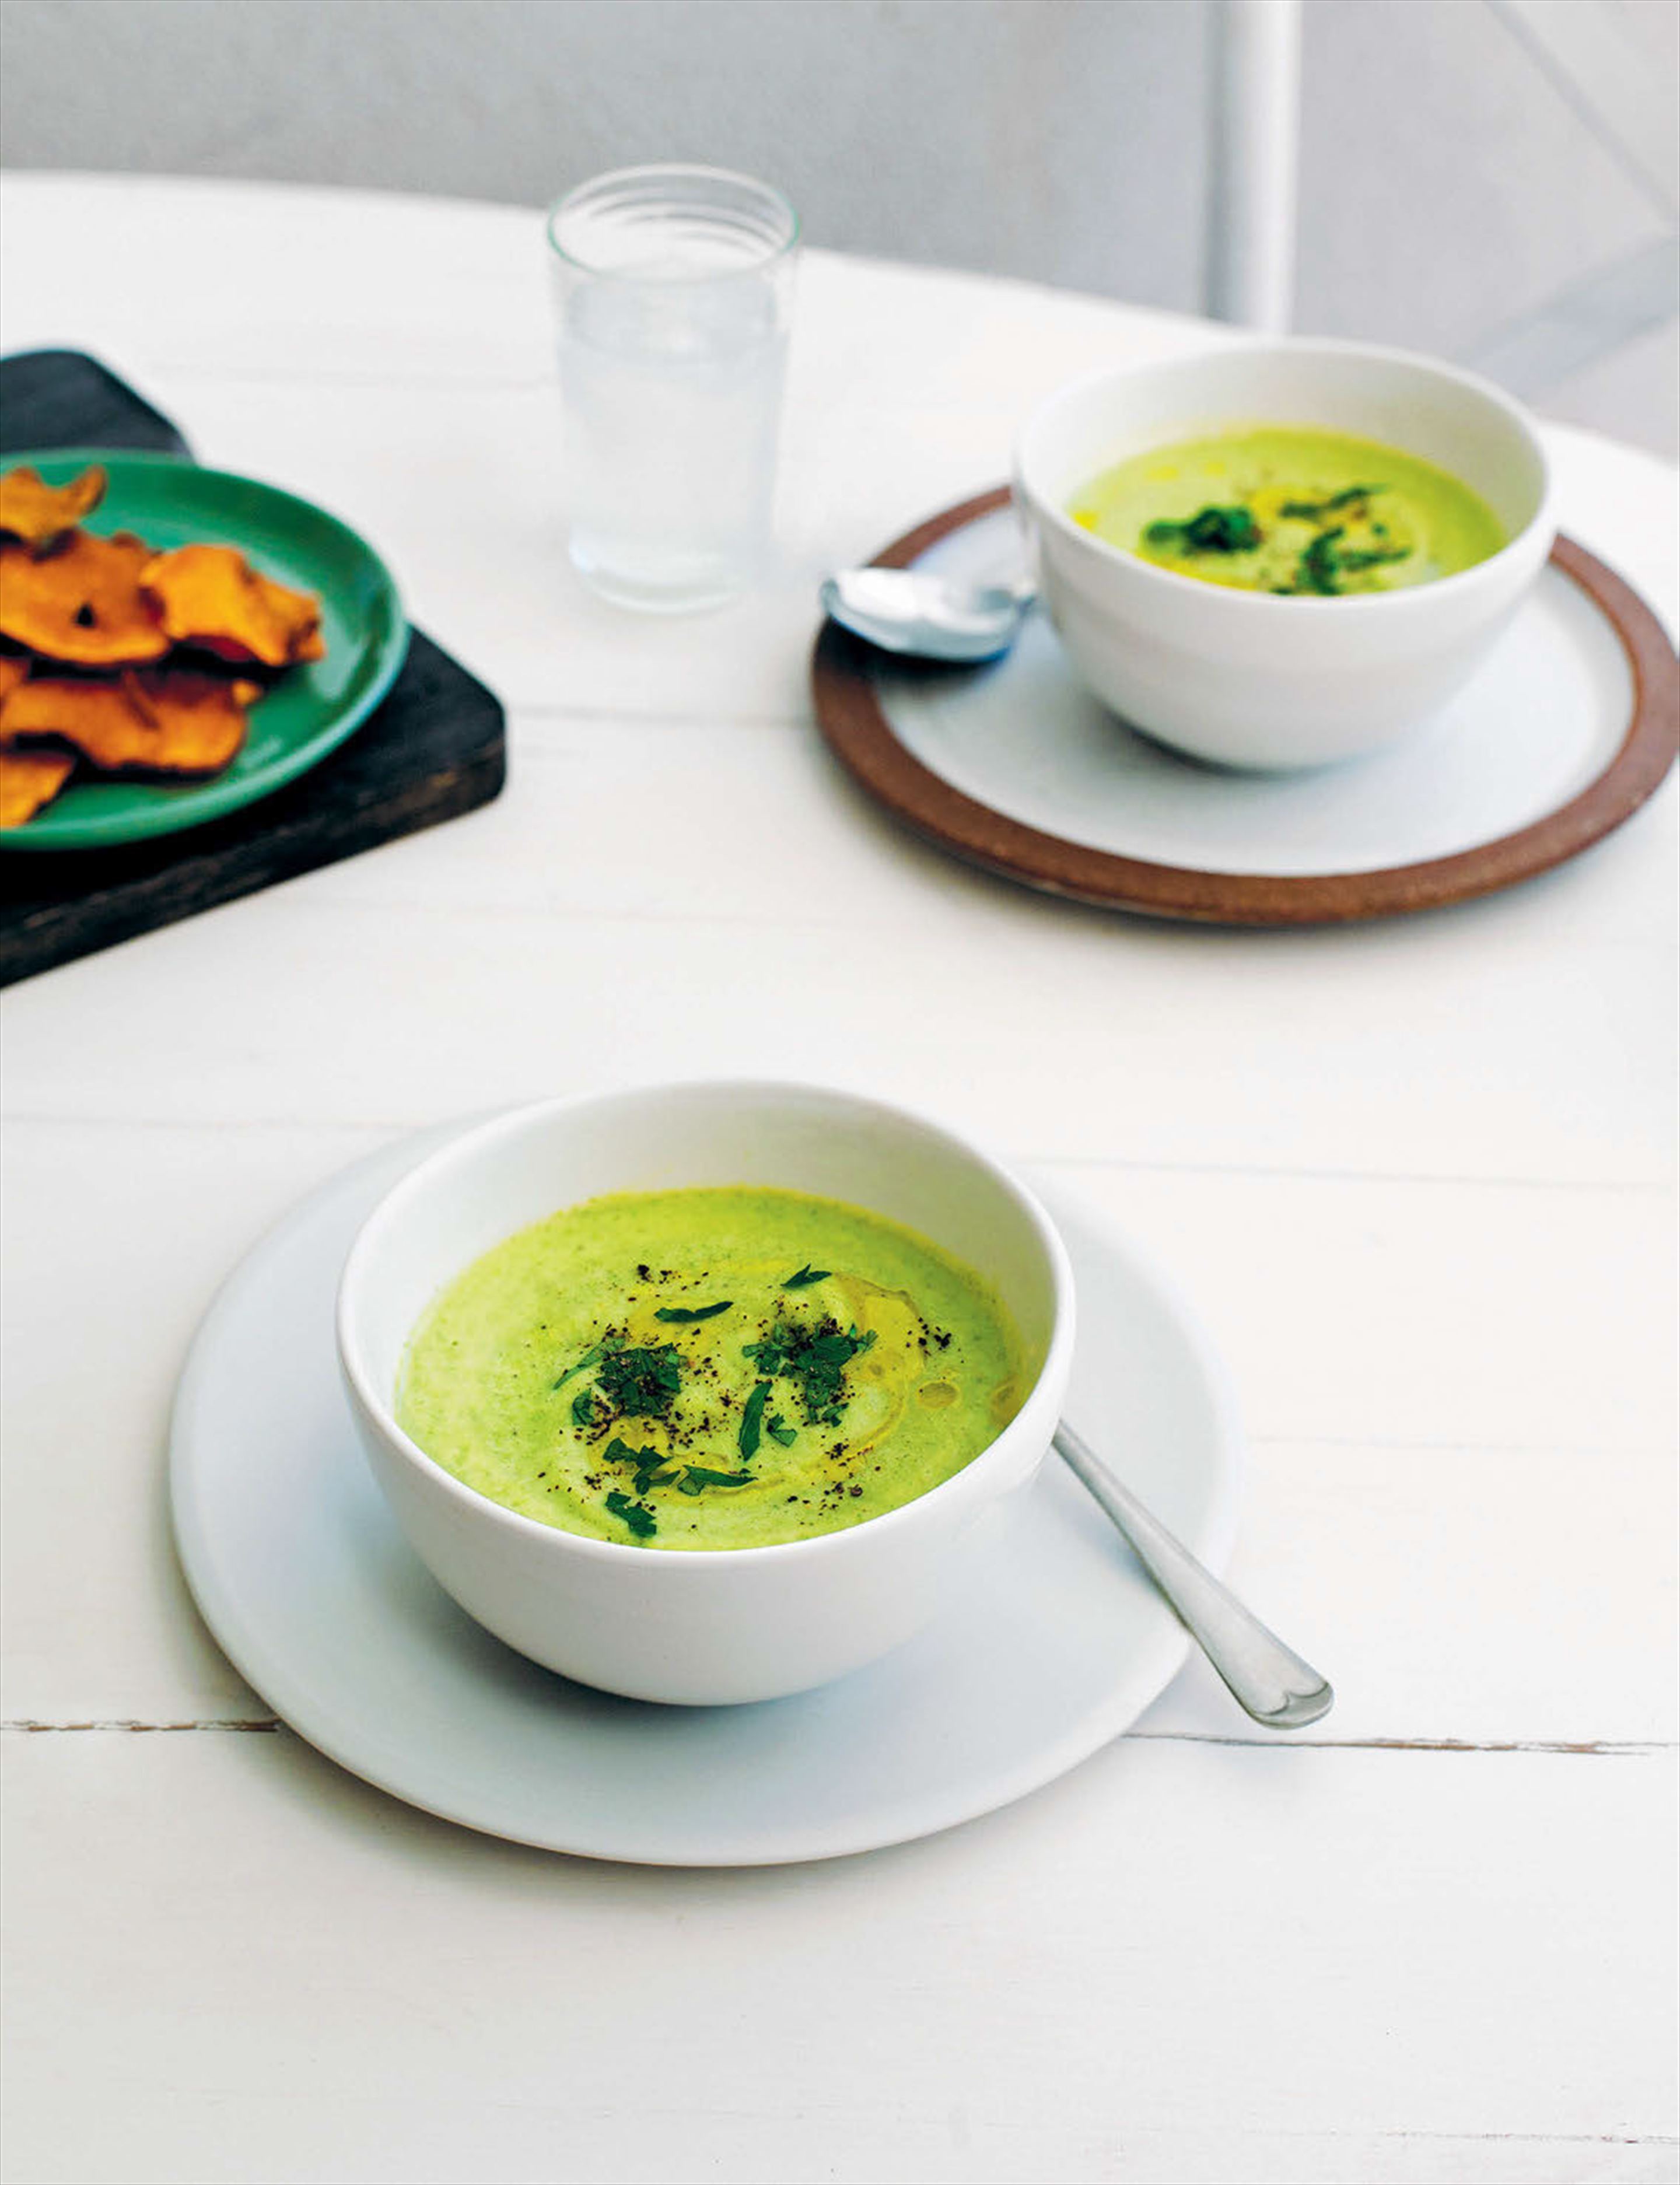 Cauliflower and broccoli soup with sweet potato crisps